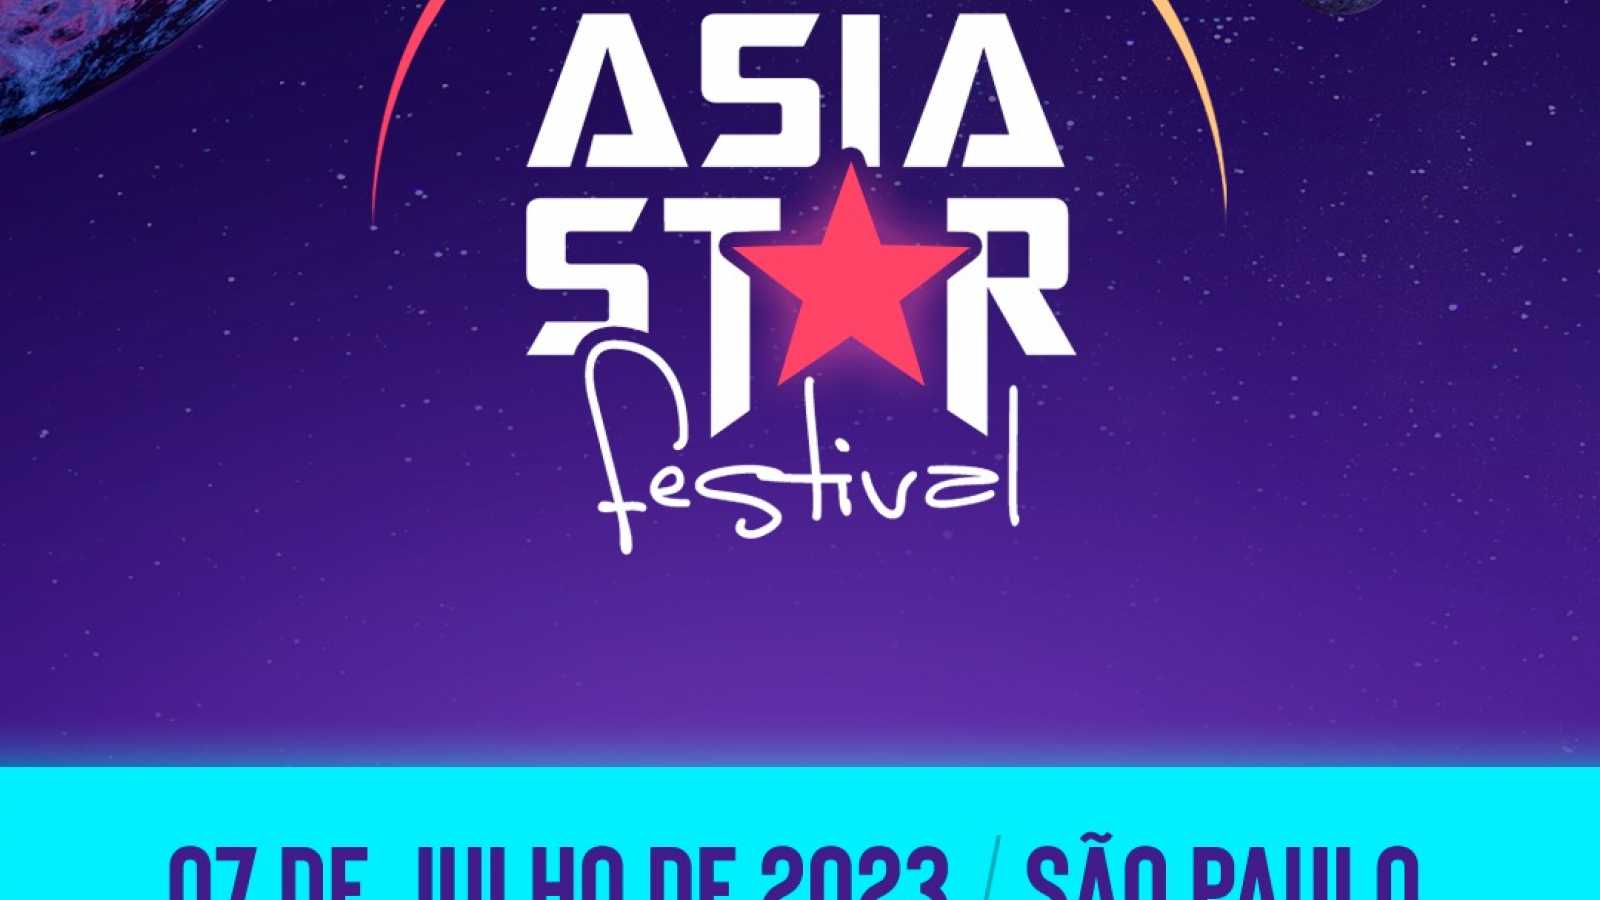 Highway Star anuncia festival inédito no Brasil: Asia Star Festival